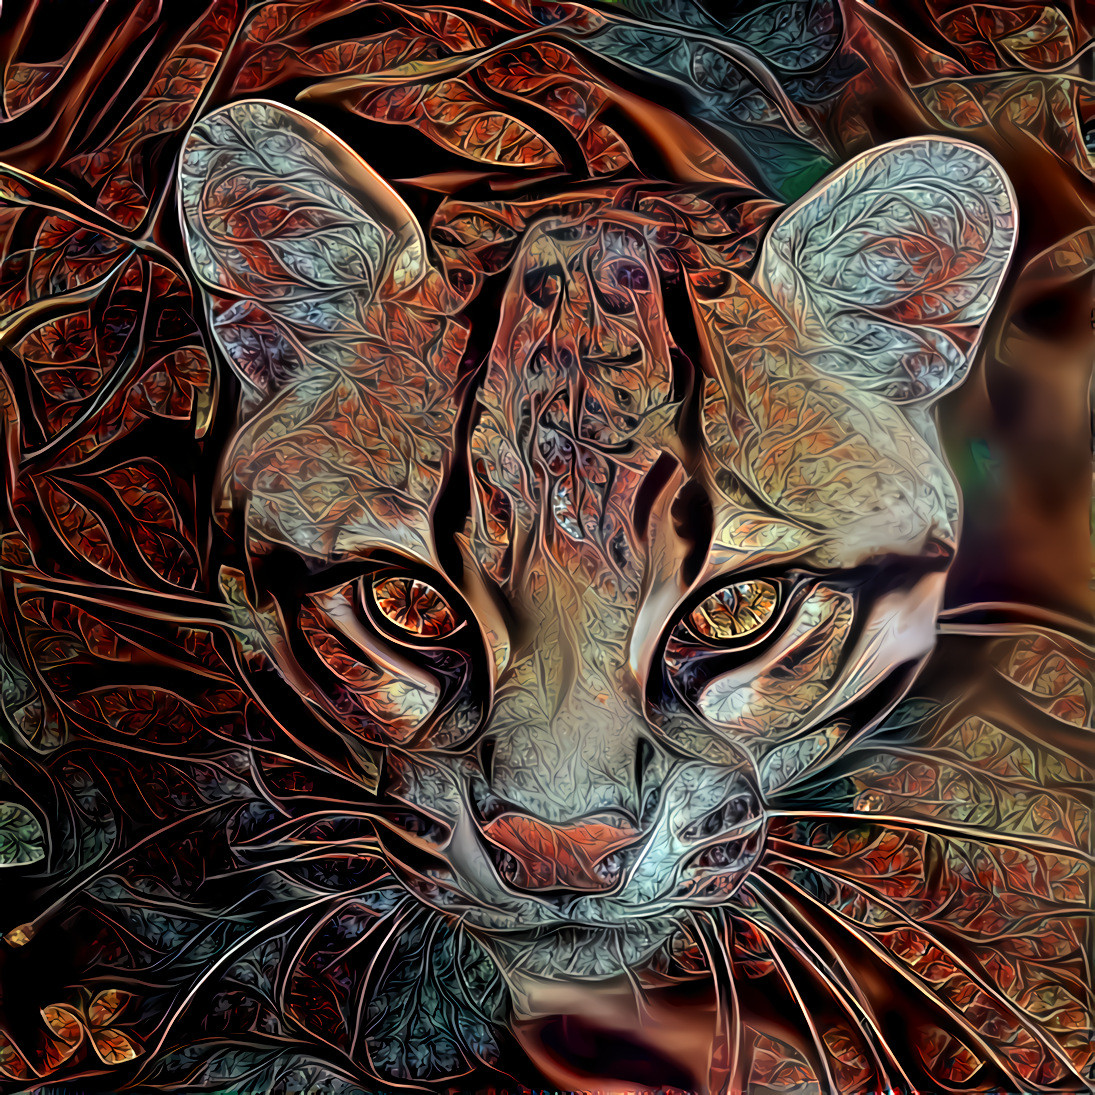 Ocelot, tiger of south america